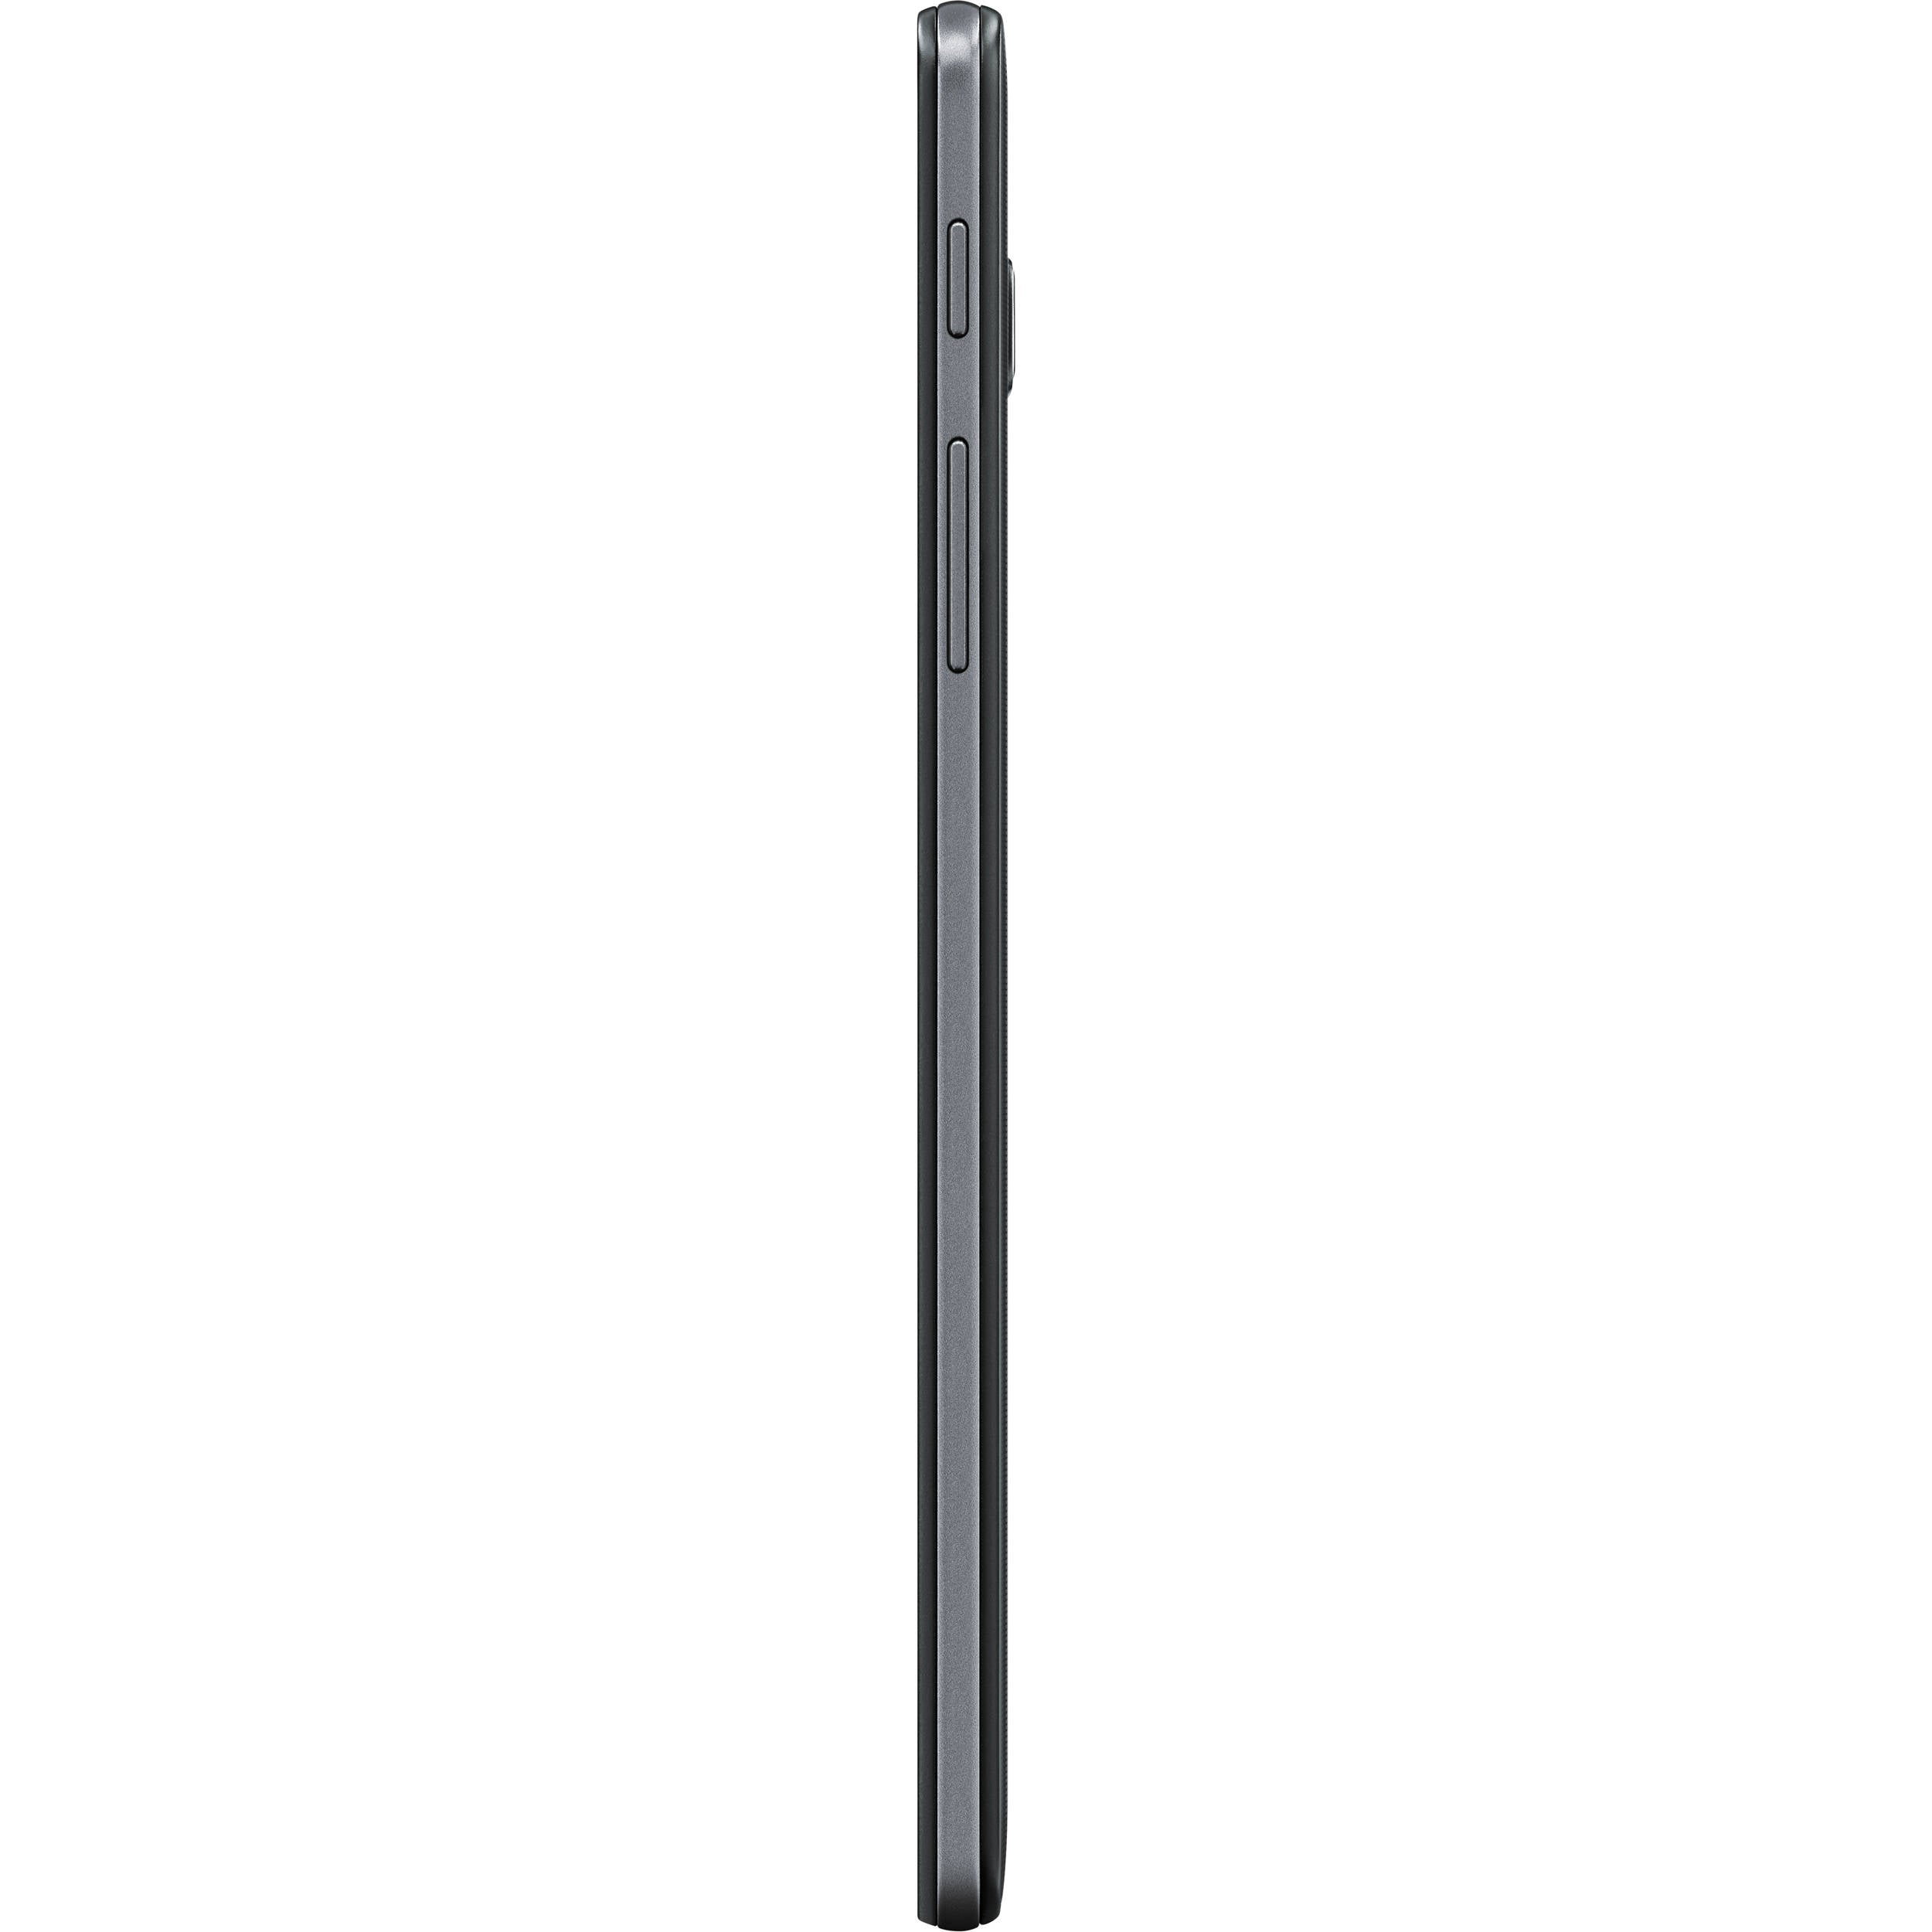 Samsung SM-T280NZKMXAR-RBC 7.0" Galaxy Tab A 8GB Wi-Fi Android Tablet Black - Certified Refurbished